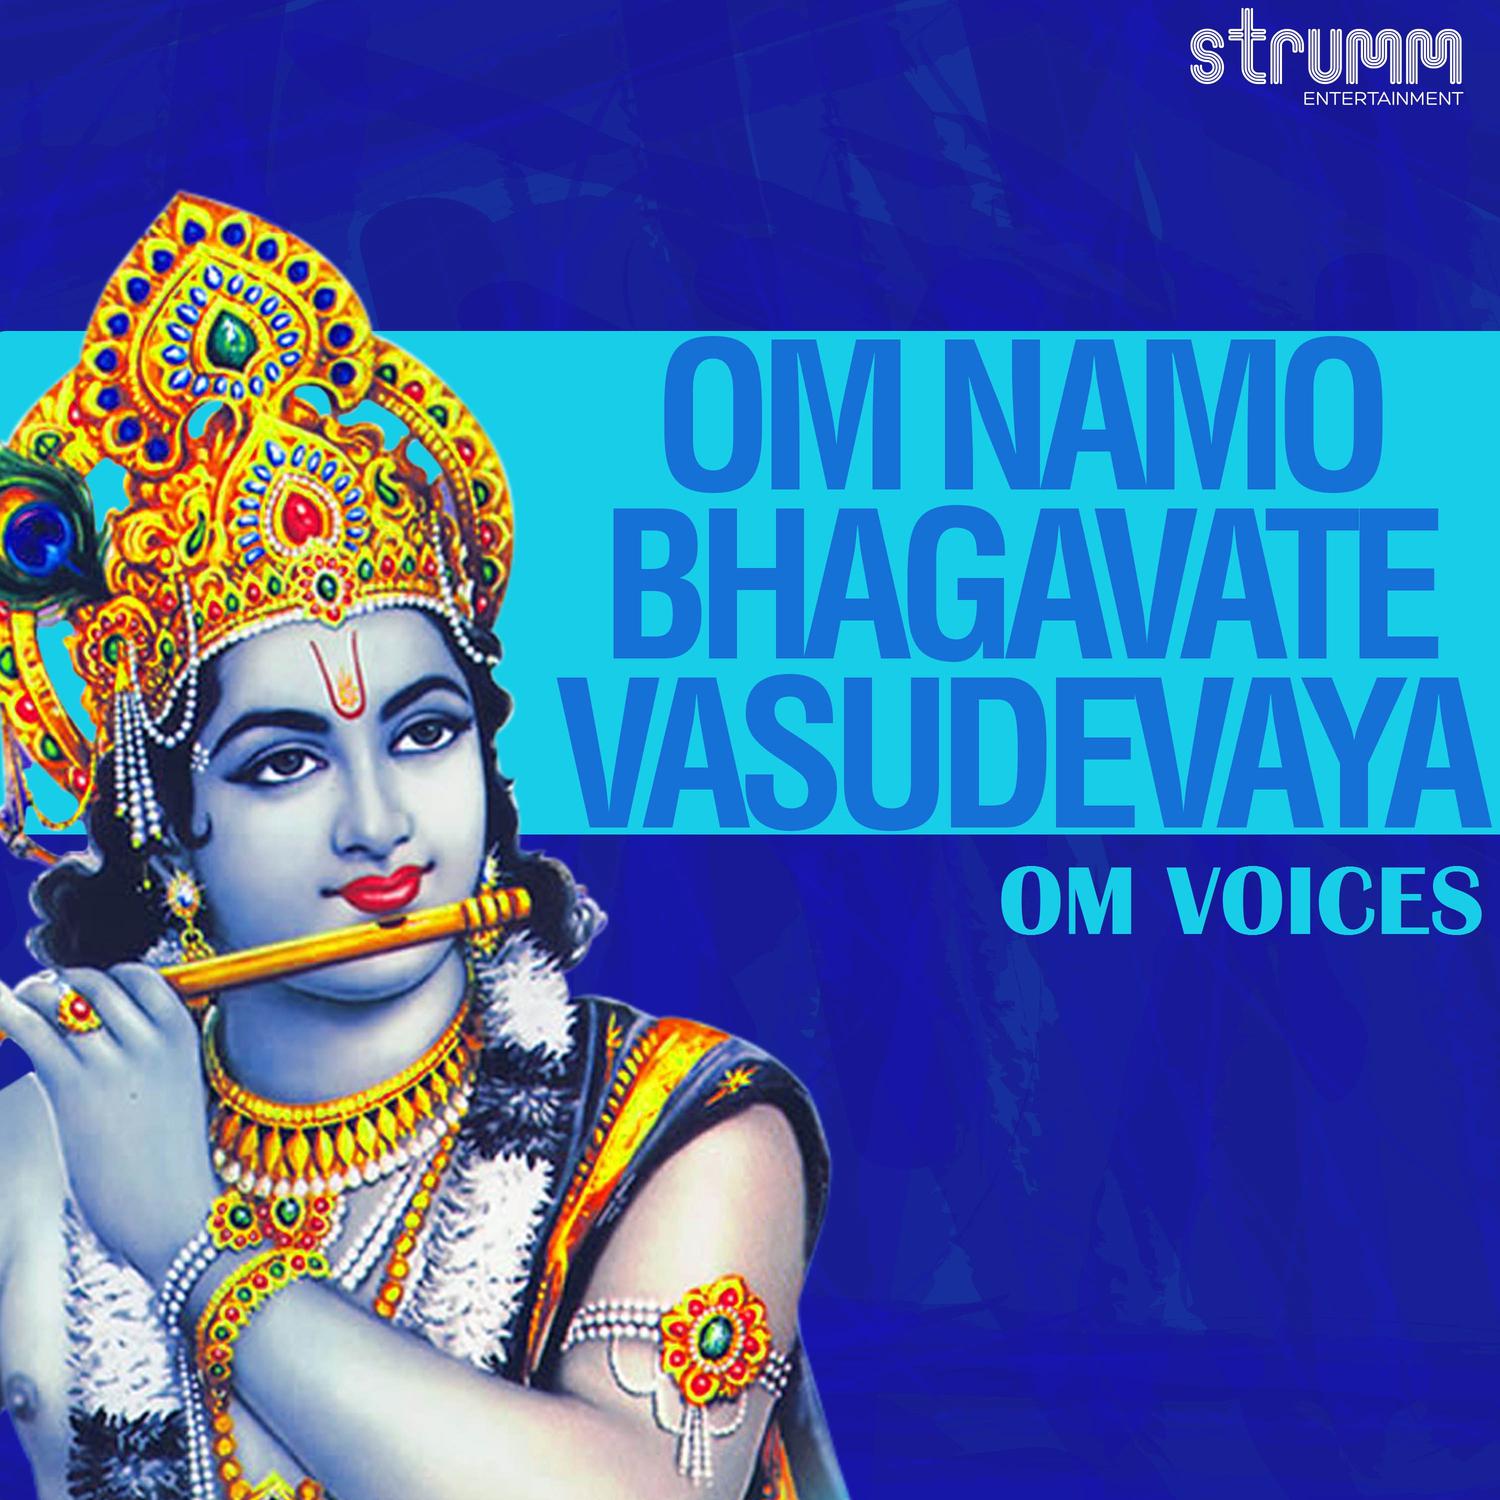 Om Namo Bhagavate Vasudevaya